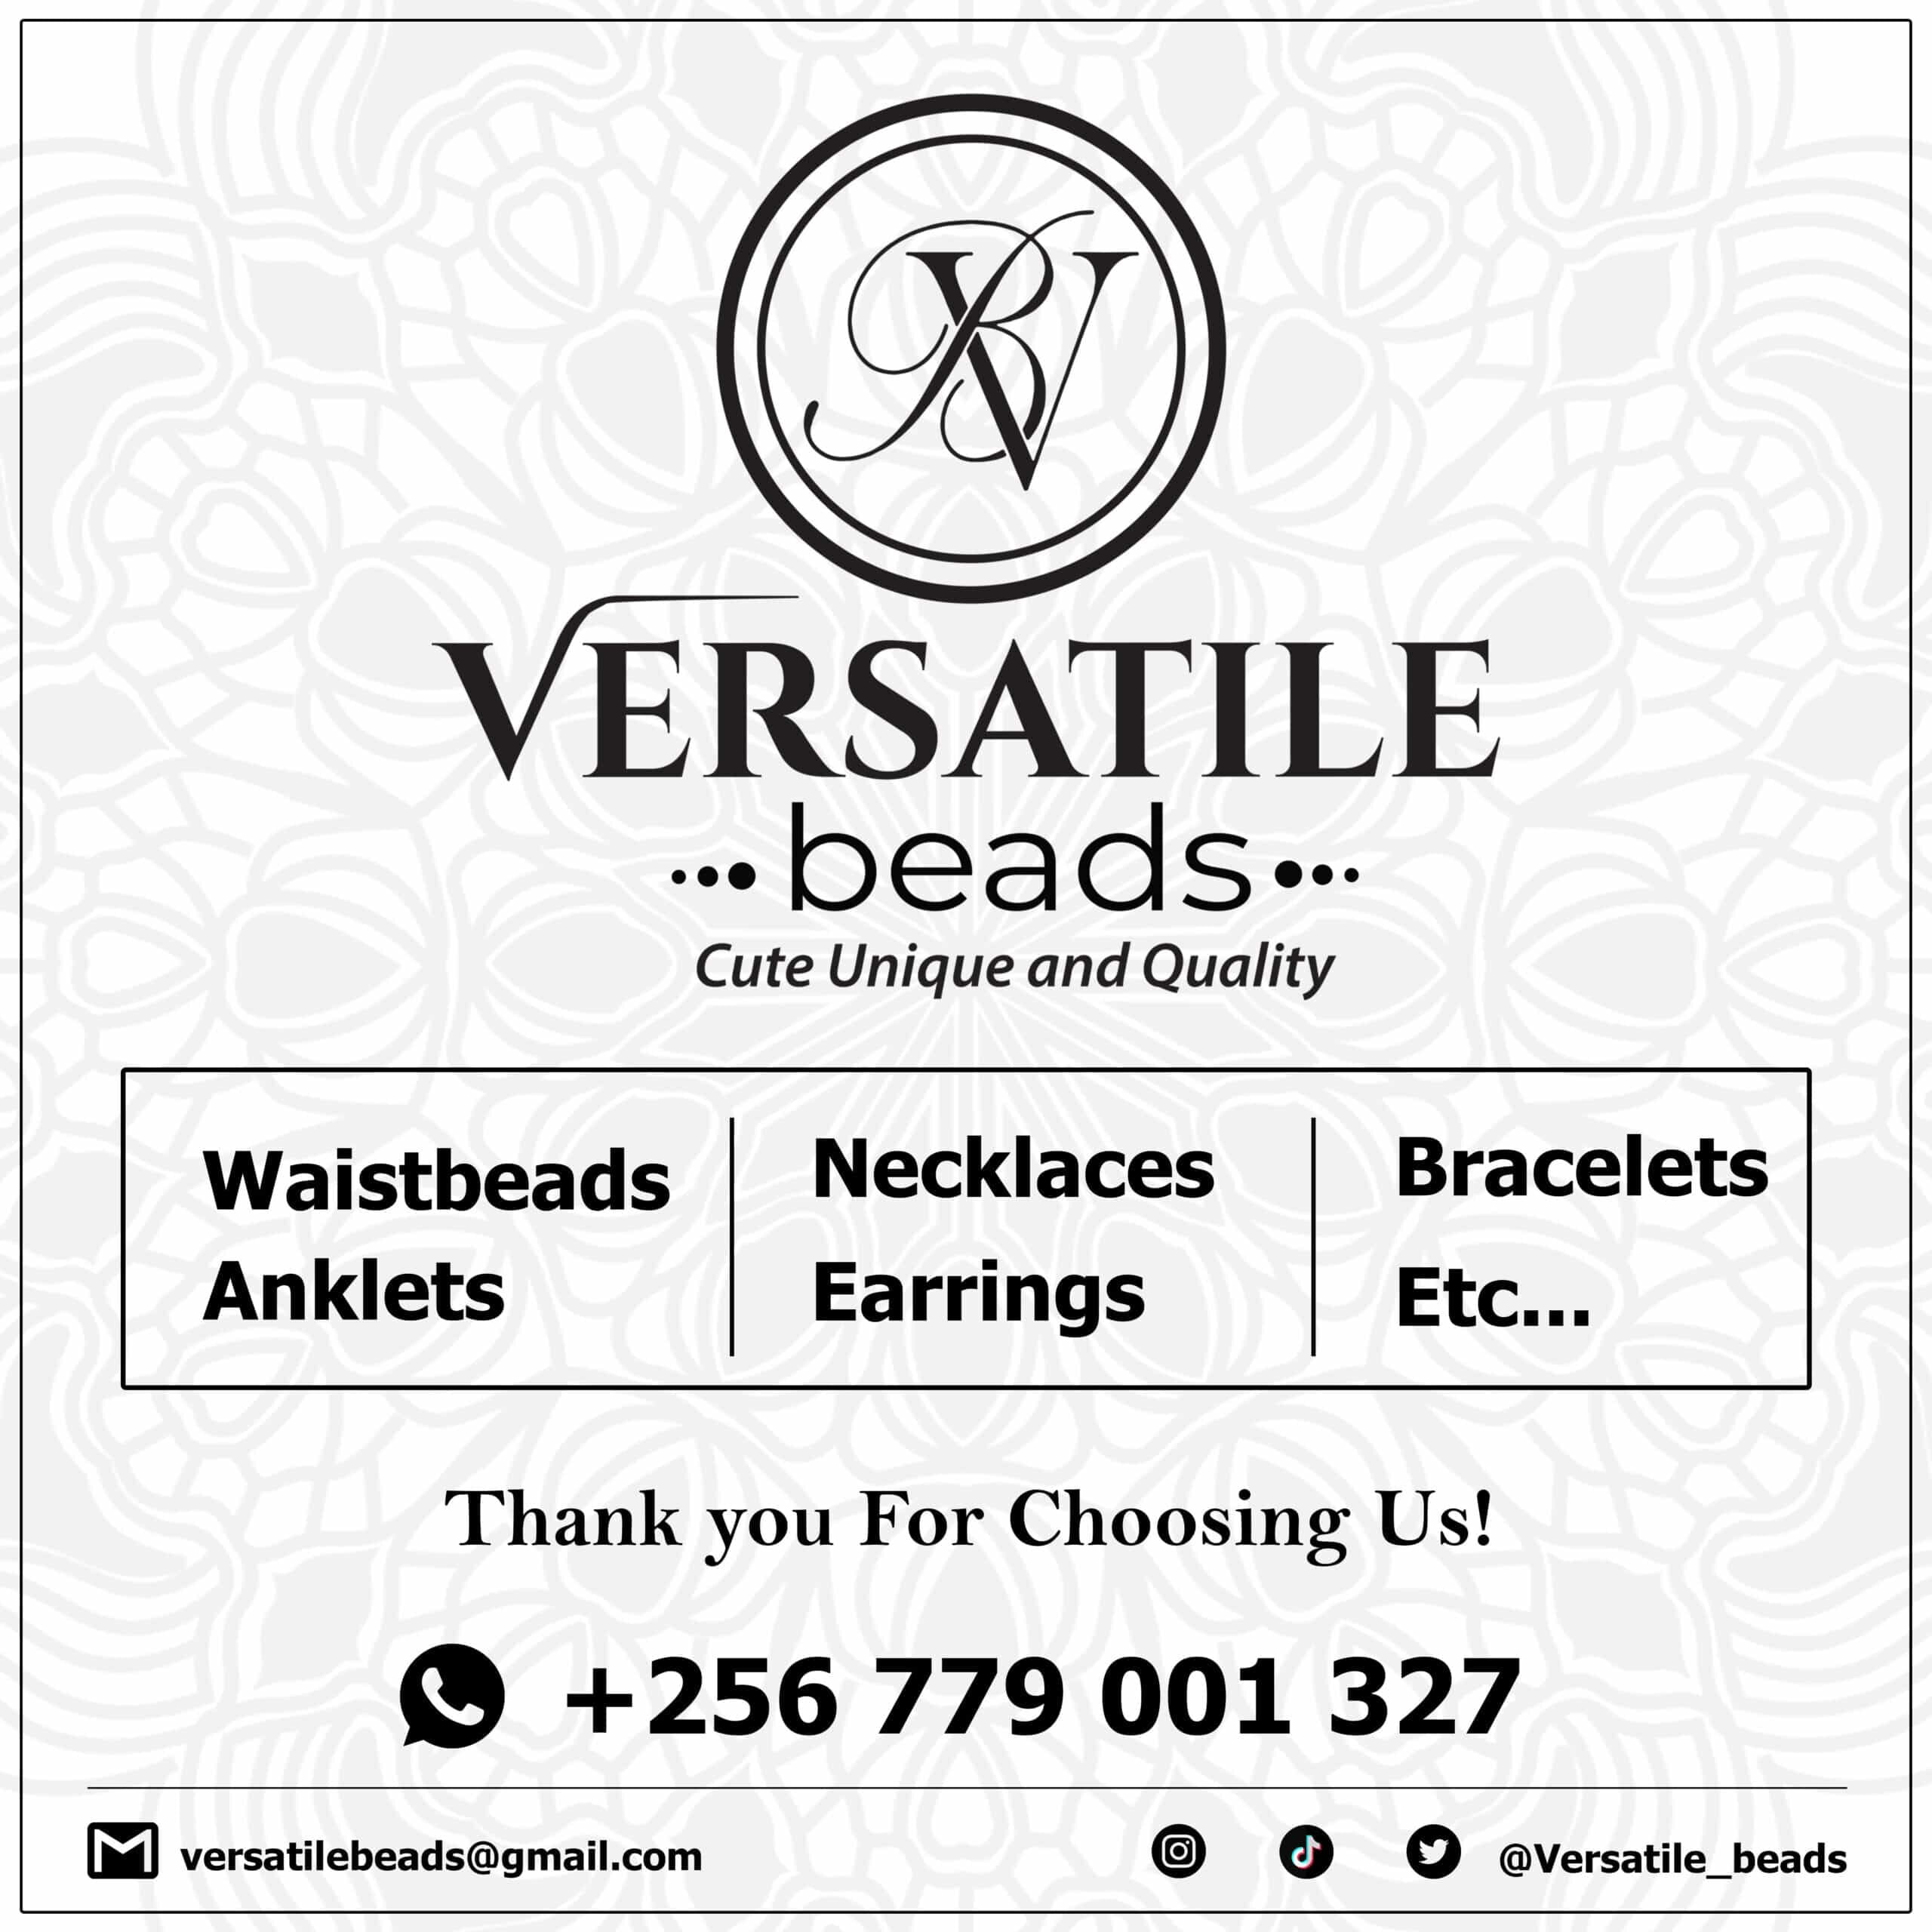 Versatile_beads